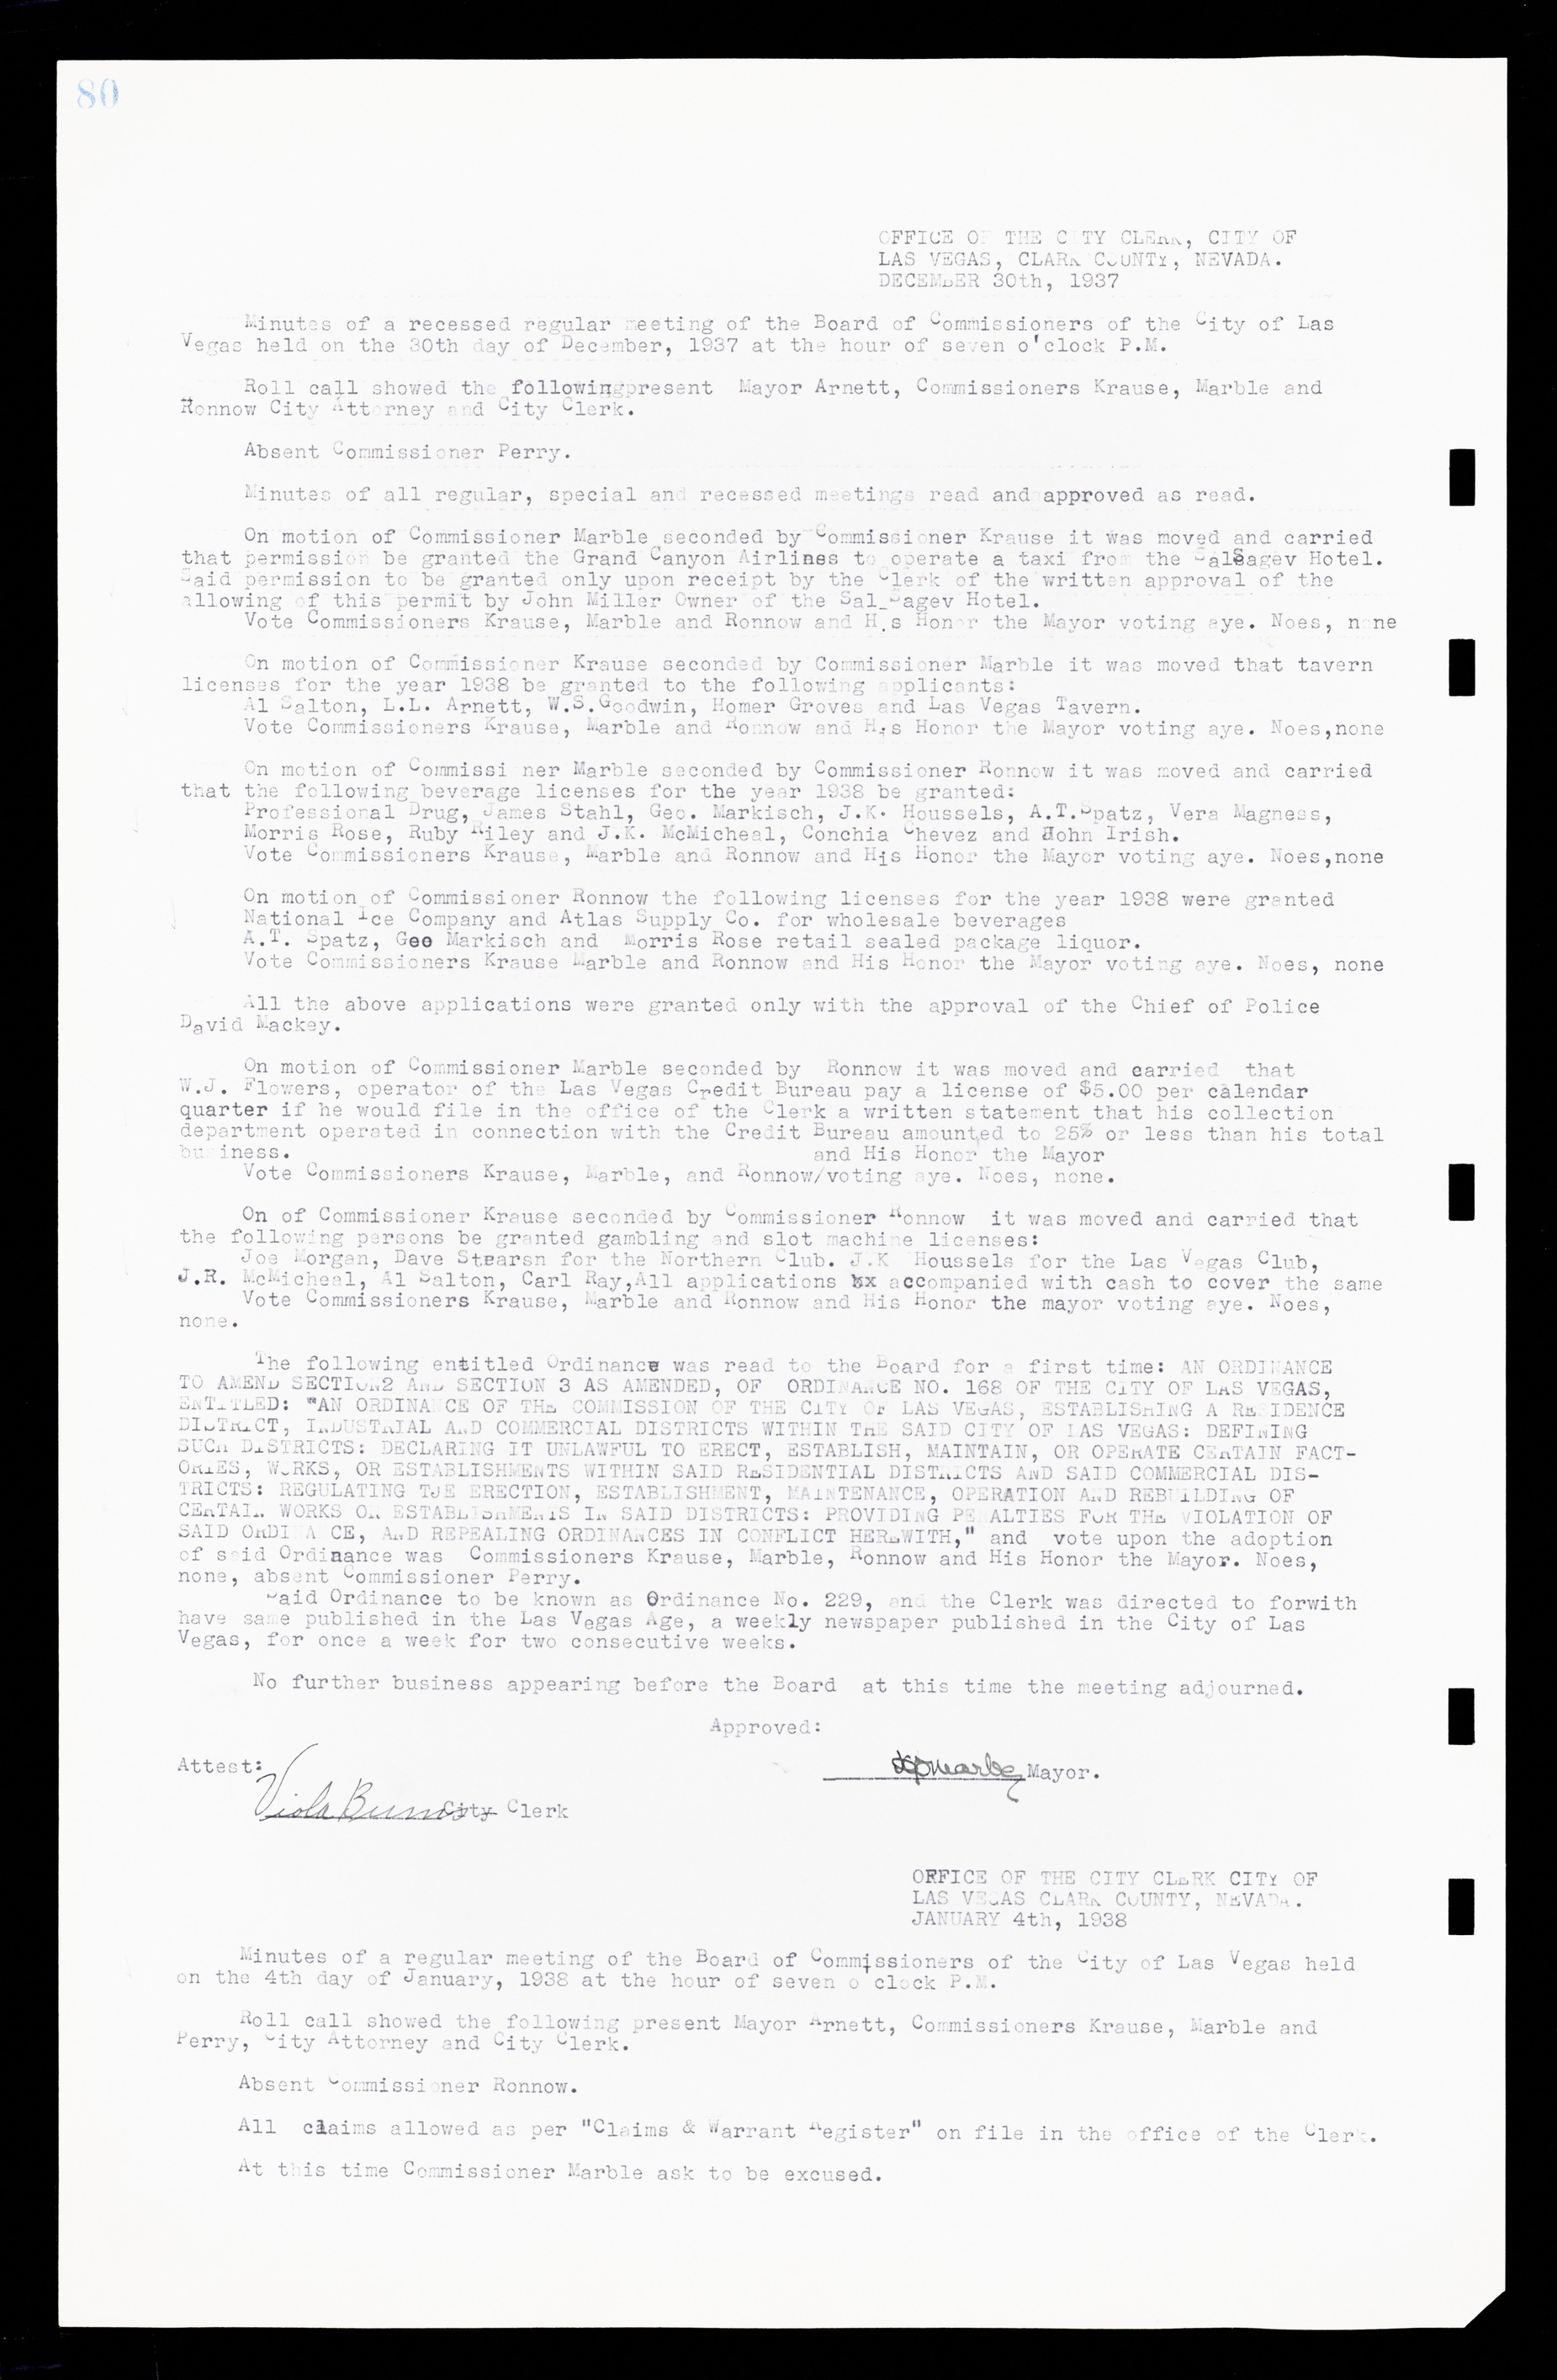 Las Vegas City Commission Minutes, February 17, 1937 to August 4, 1942, lvc000004-89